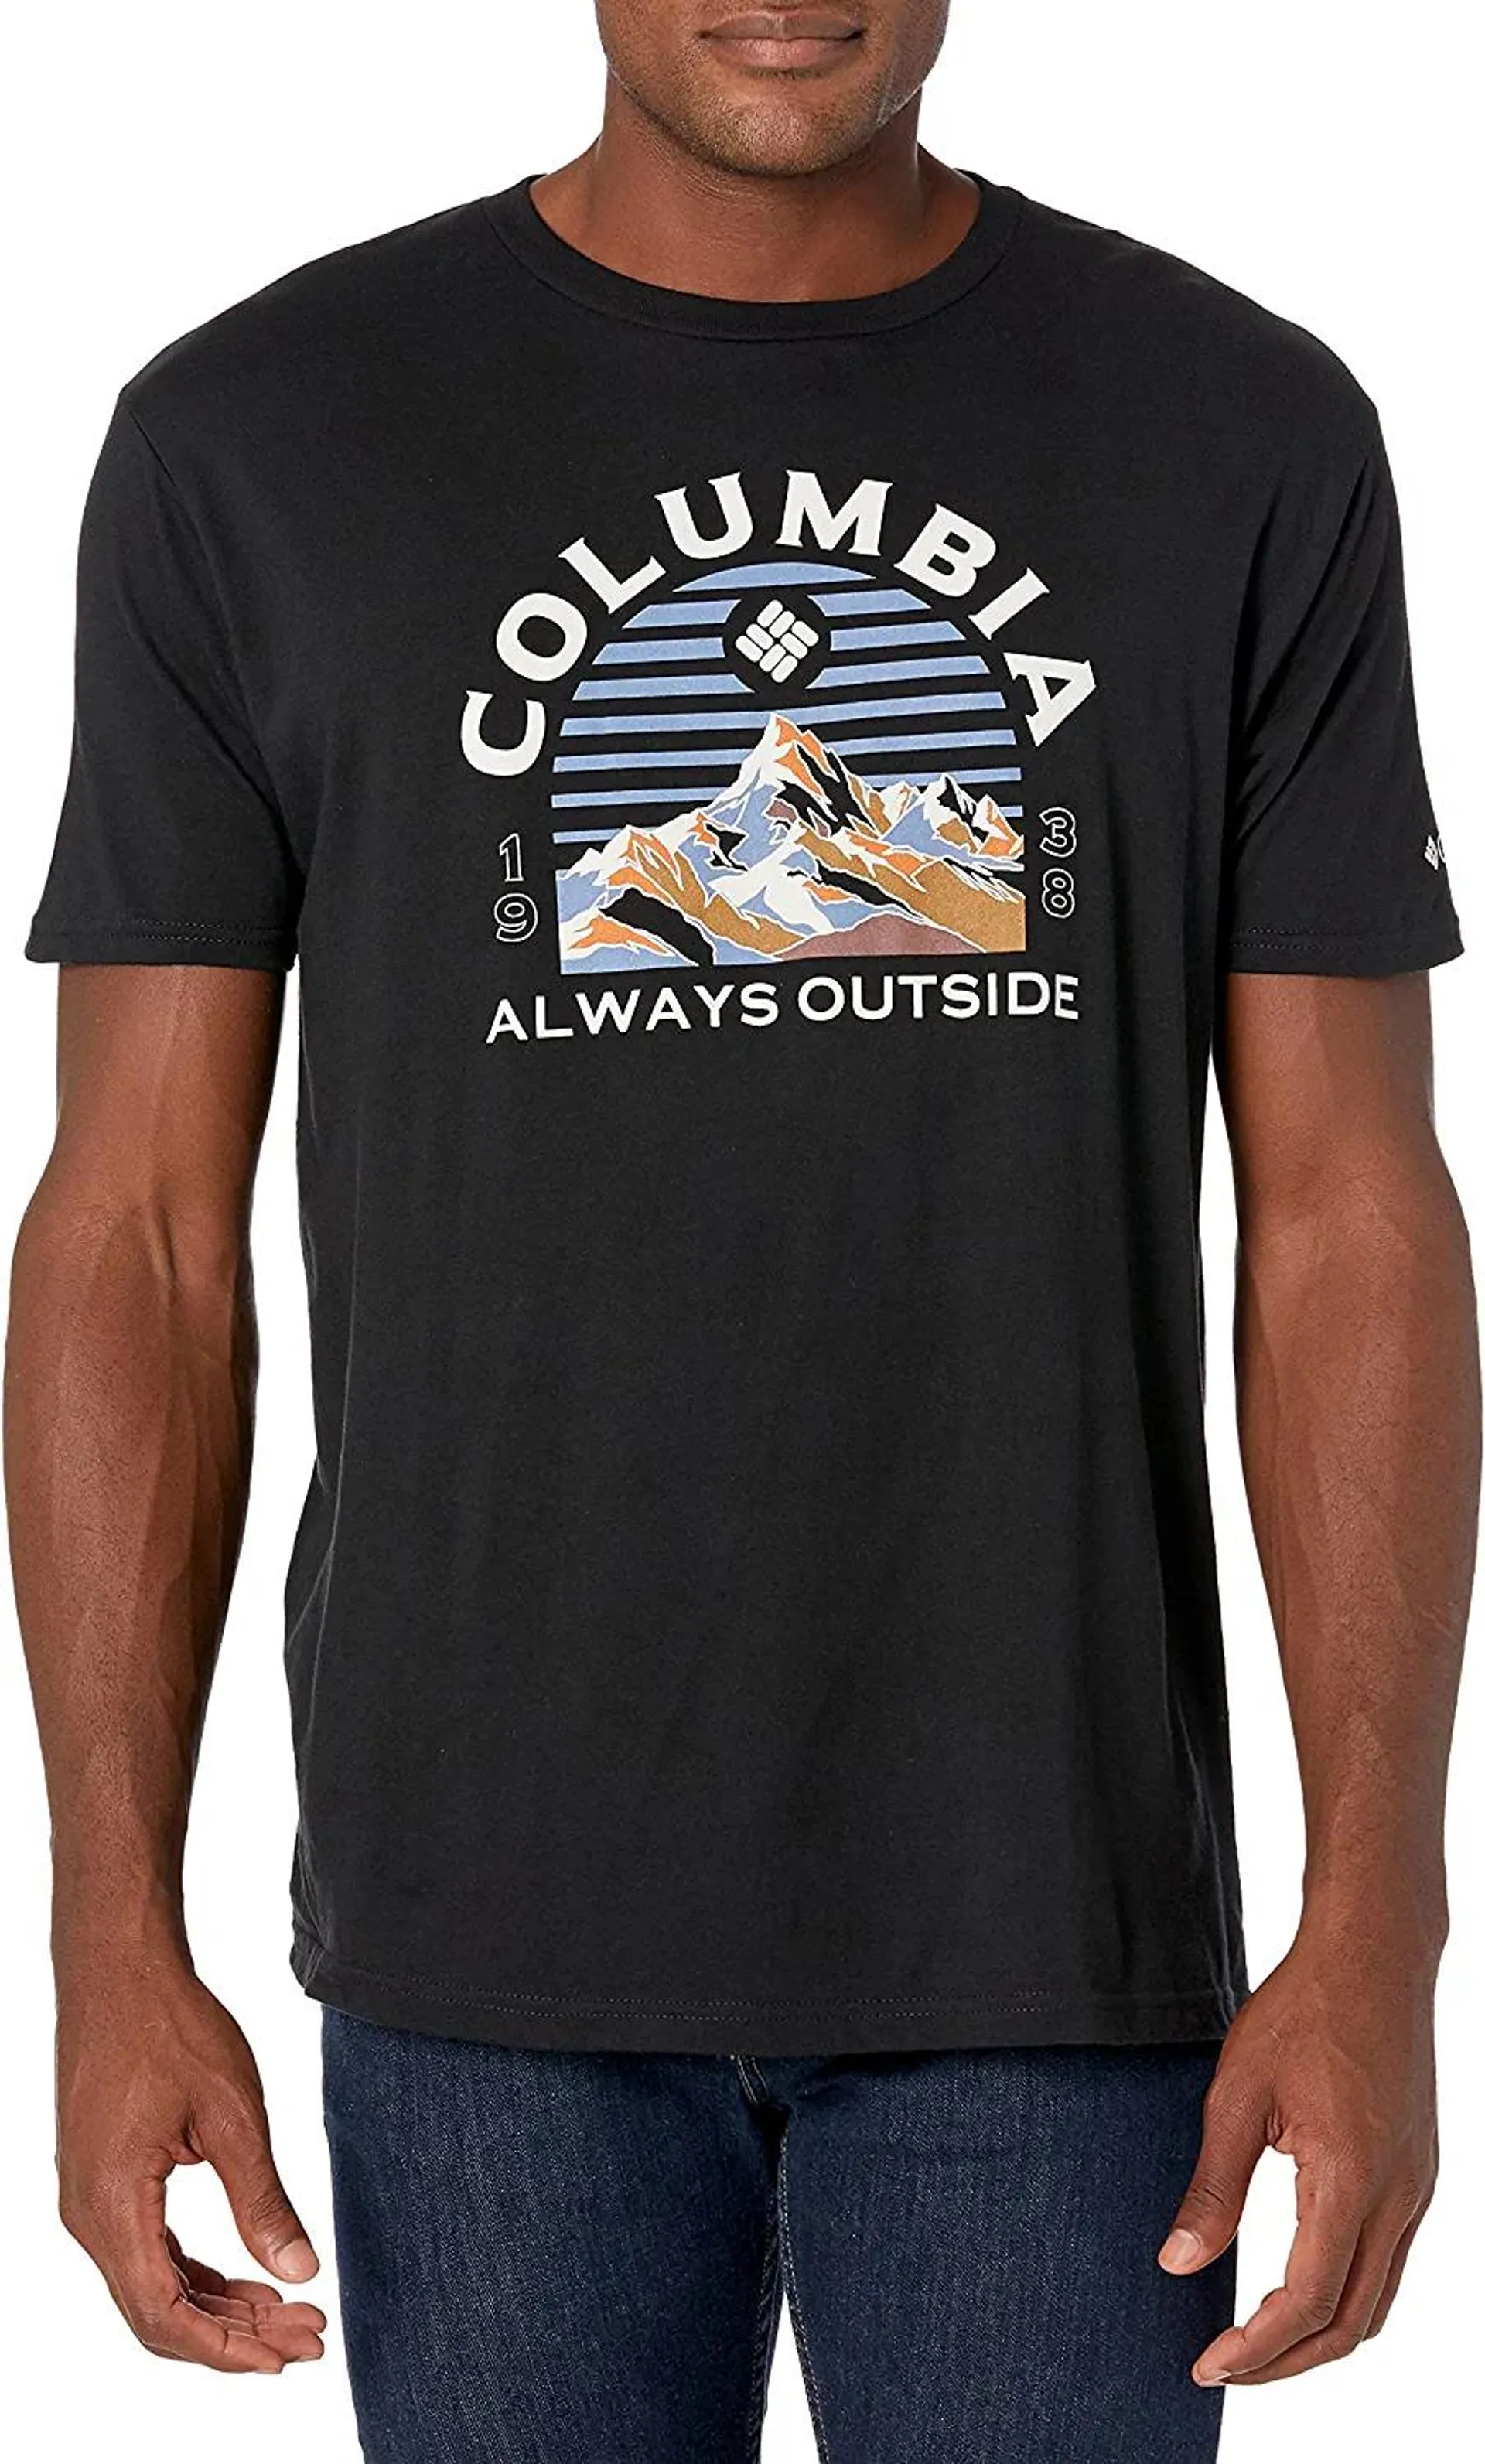 Columbia Men's Graphic T-Shirt